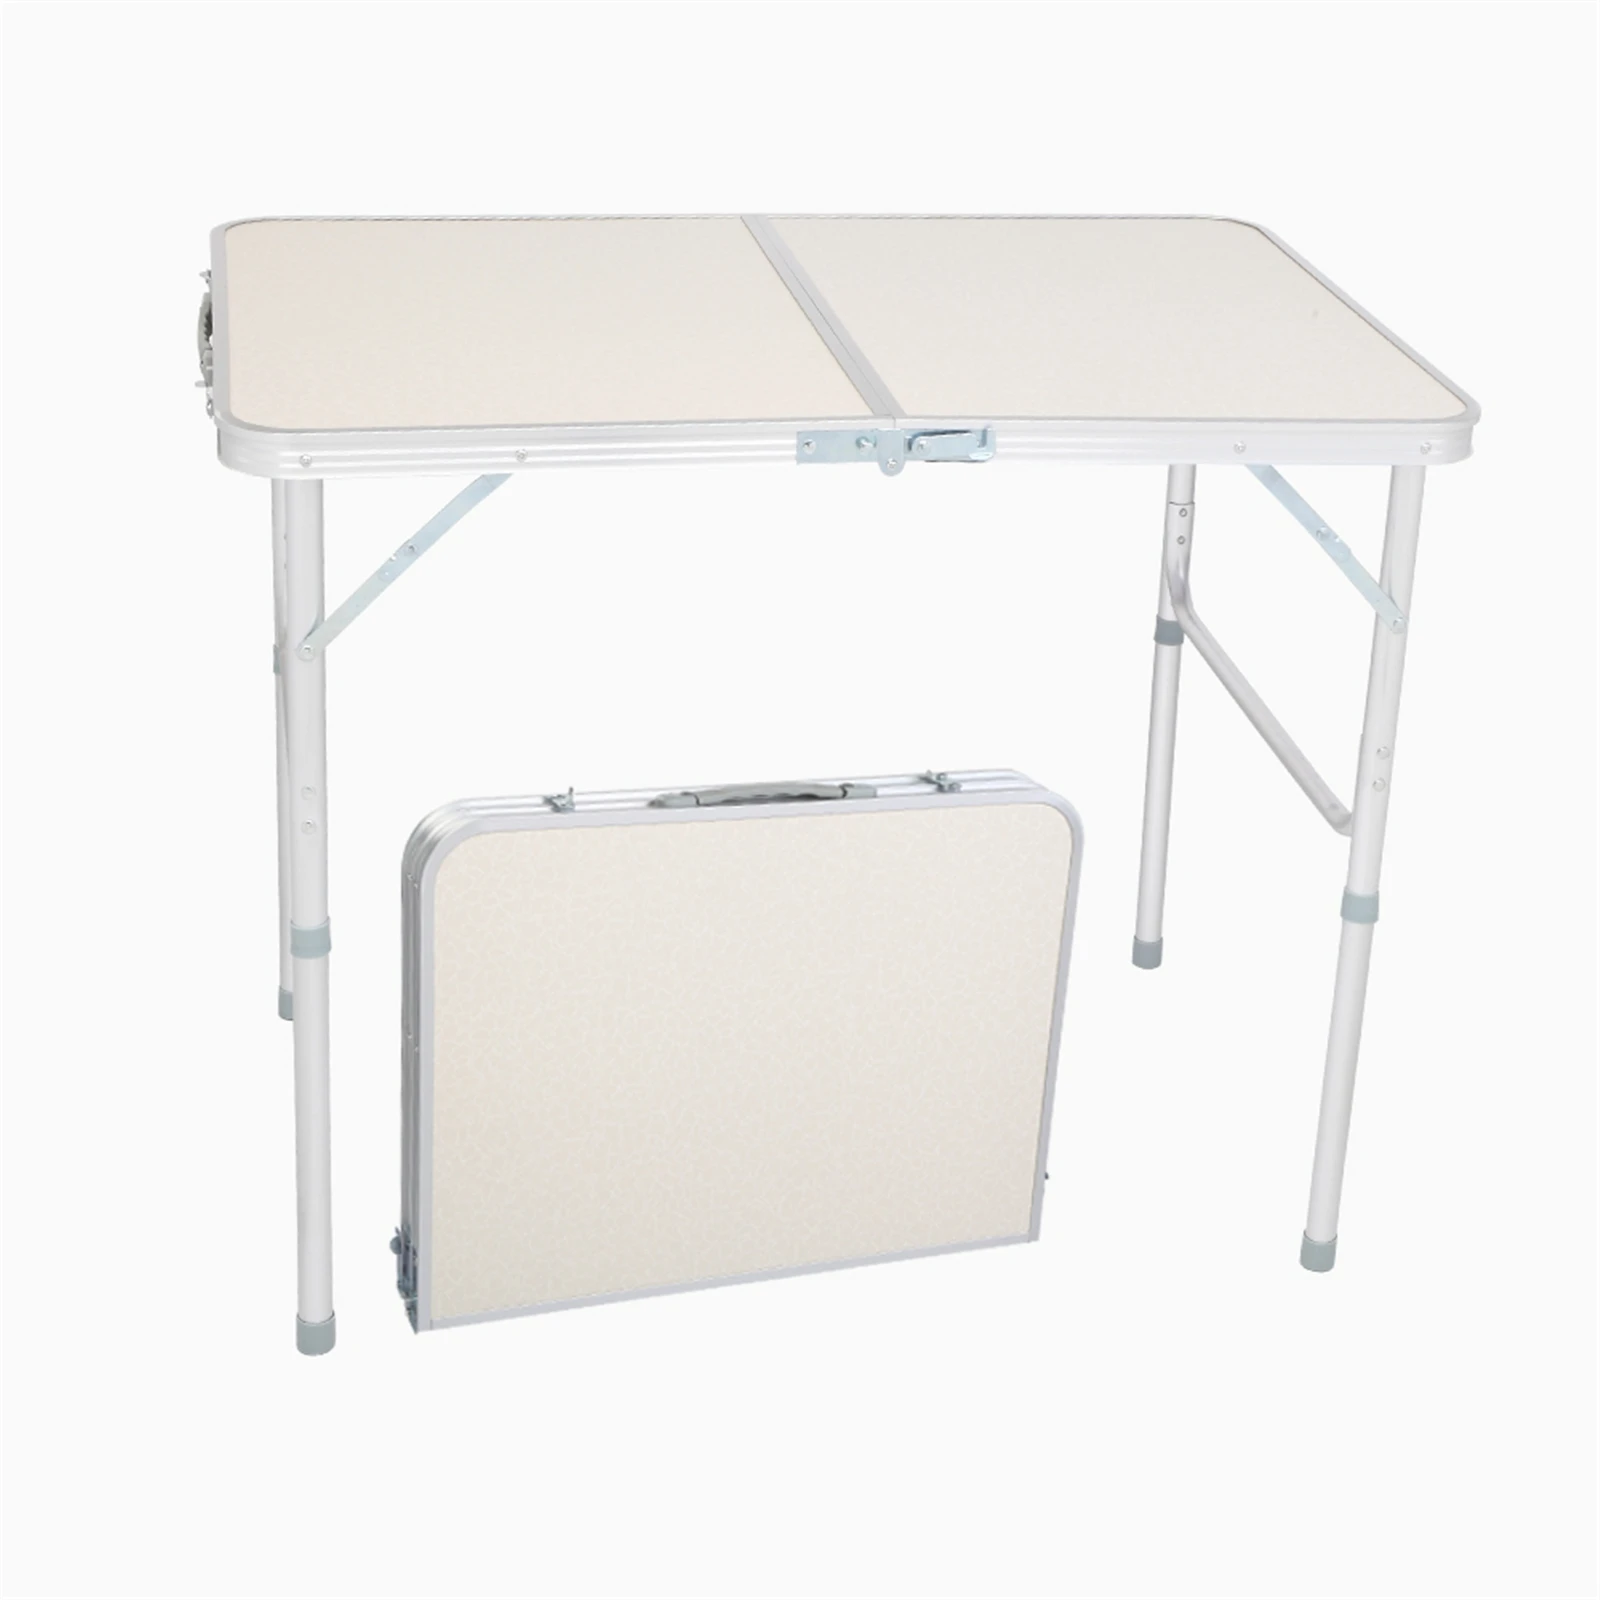 90-x-60-x-70cm-home-use-aluminum-alloy-folding-table-white-camping-table-foldable-table-camping-outdoor-furniture